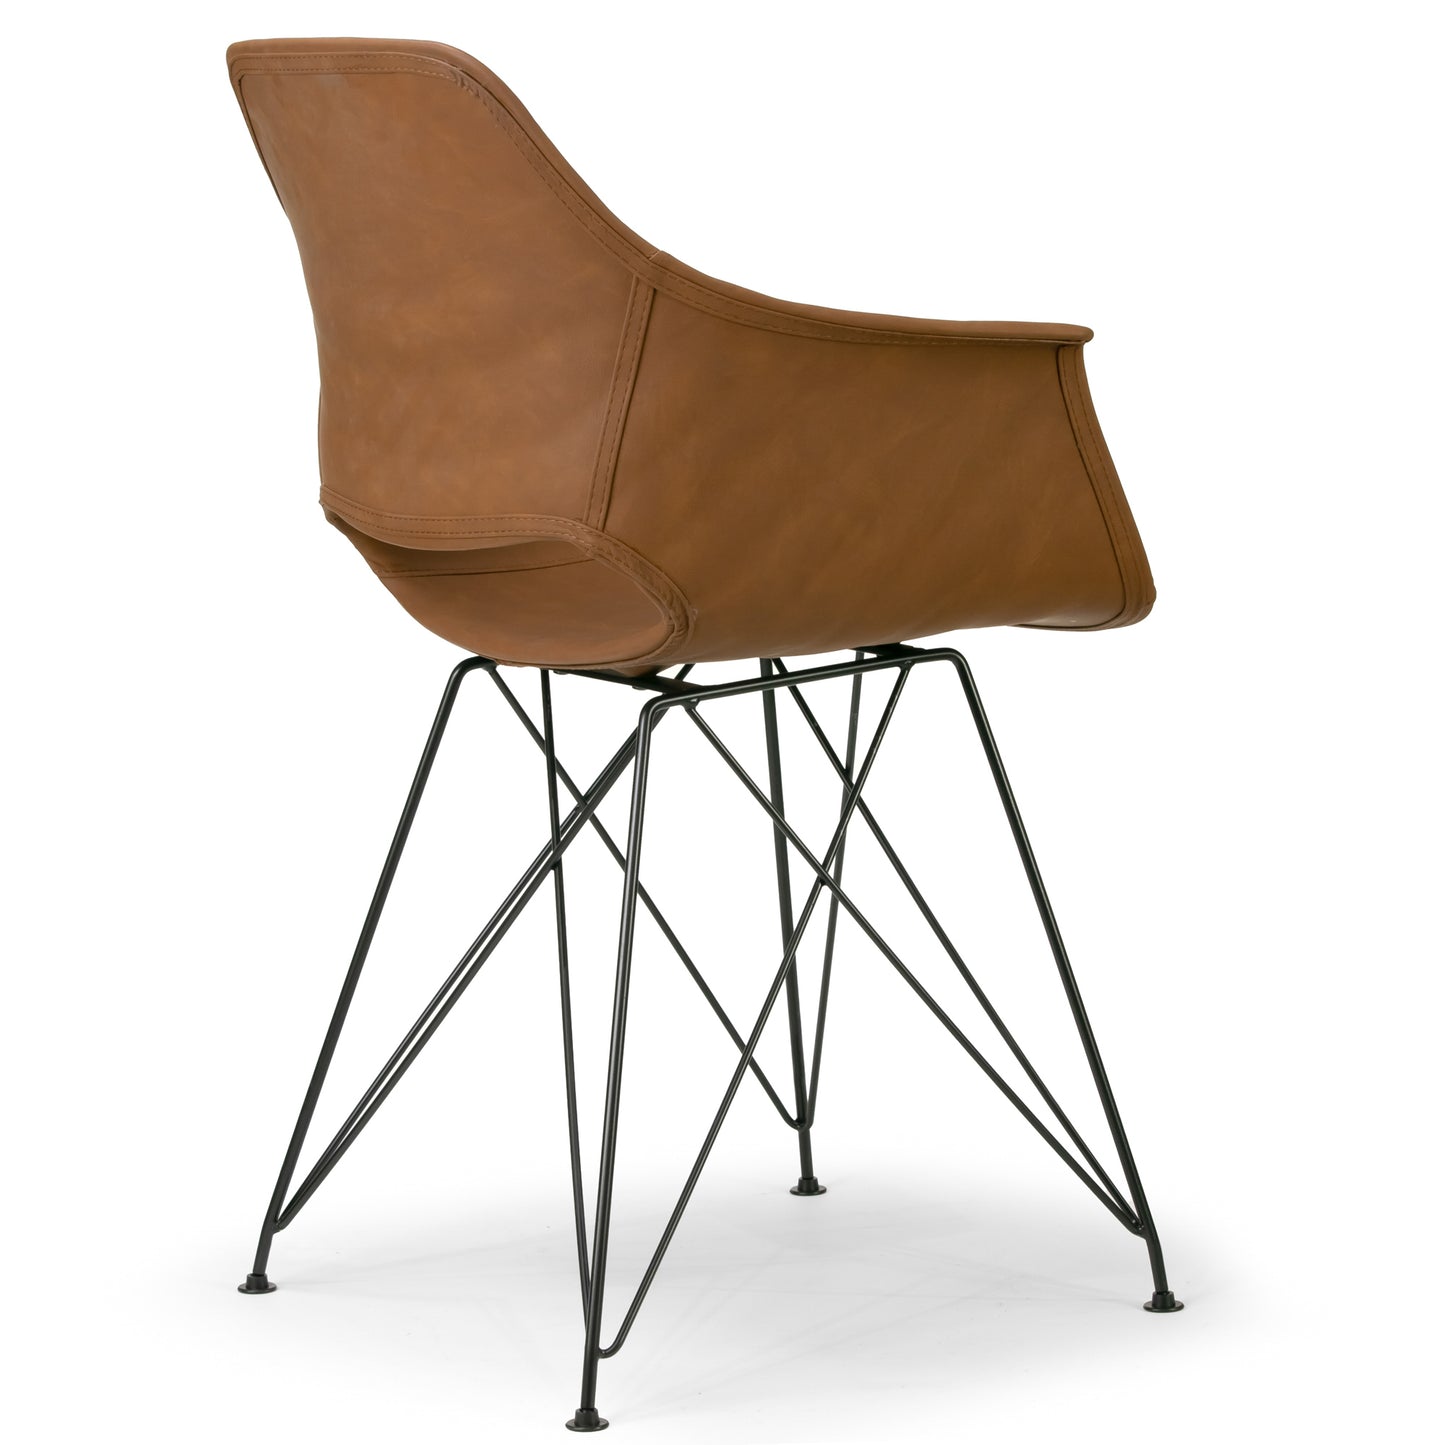 Set of 2 Alora Retro Modern Caramel Brown Arm Chair with Black Steel Legs